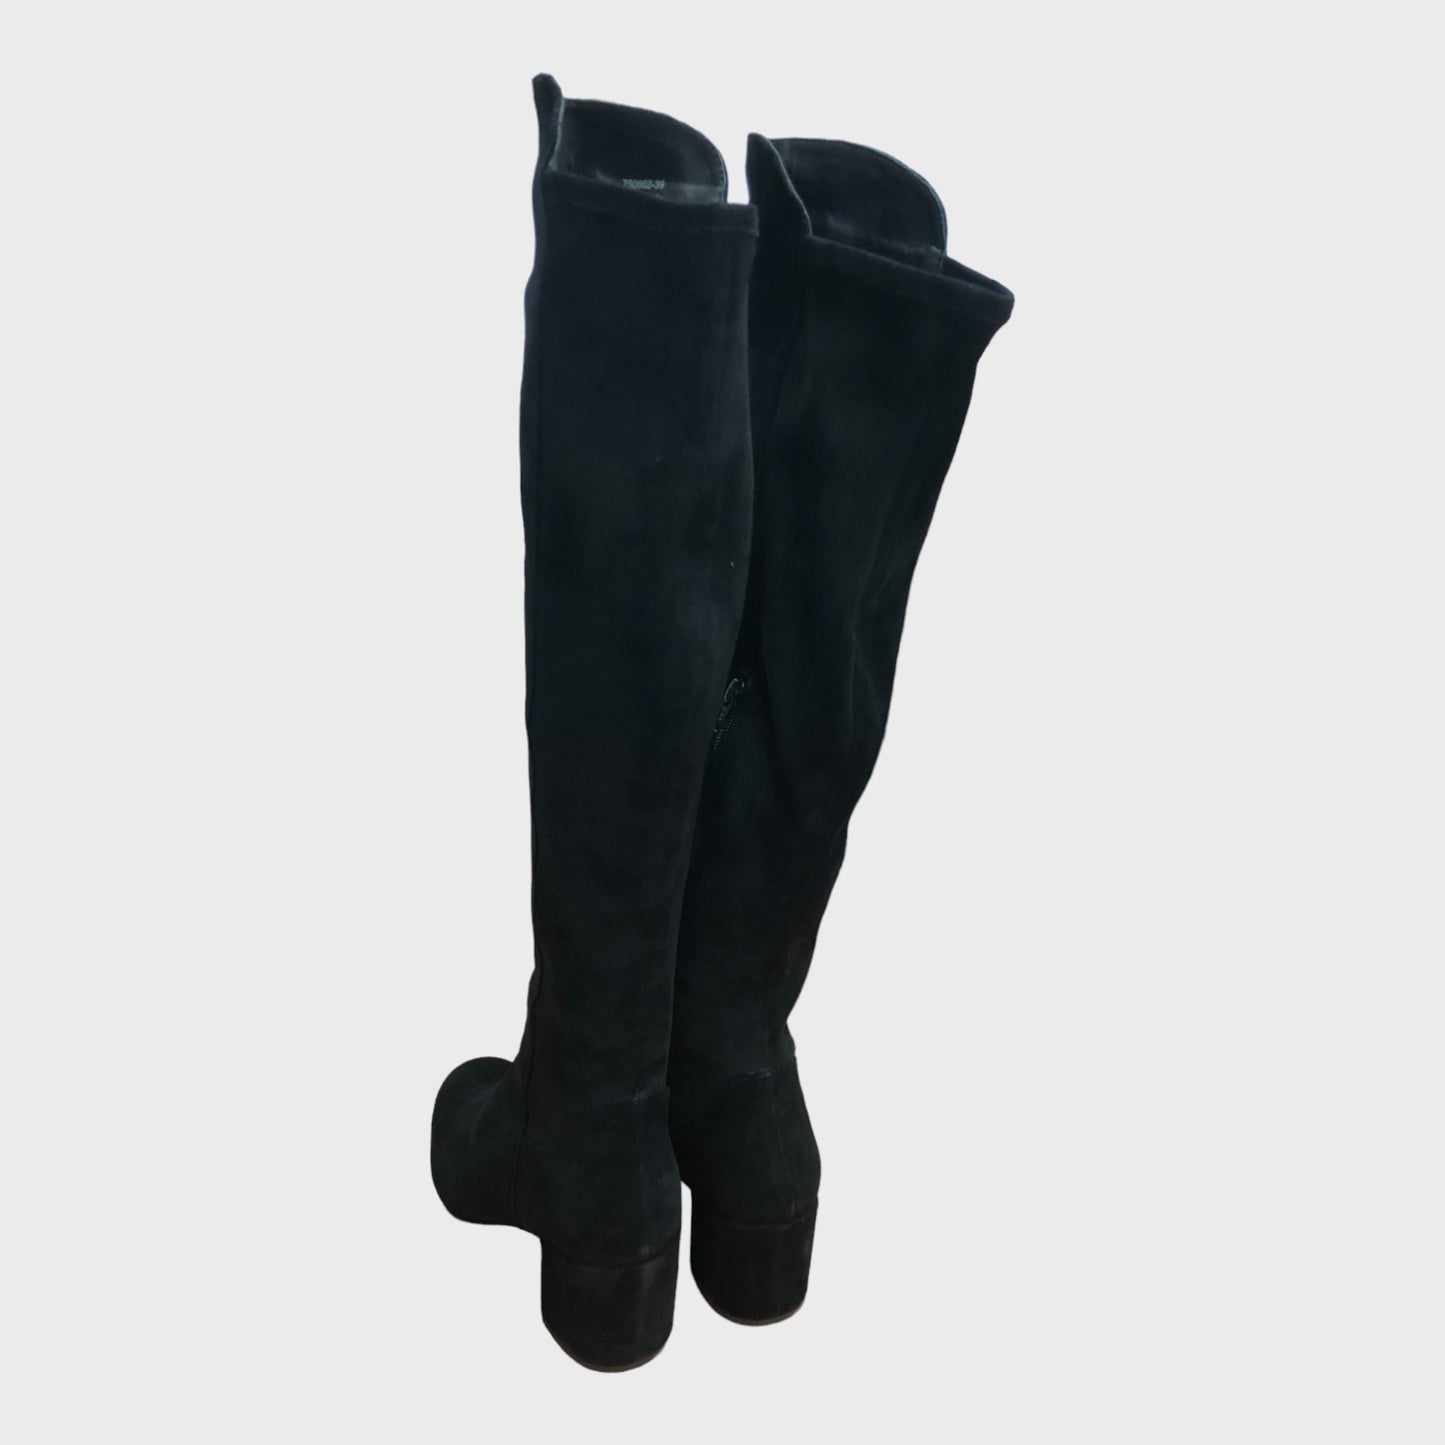 Women's Black Knee High Boots Size 5.5